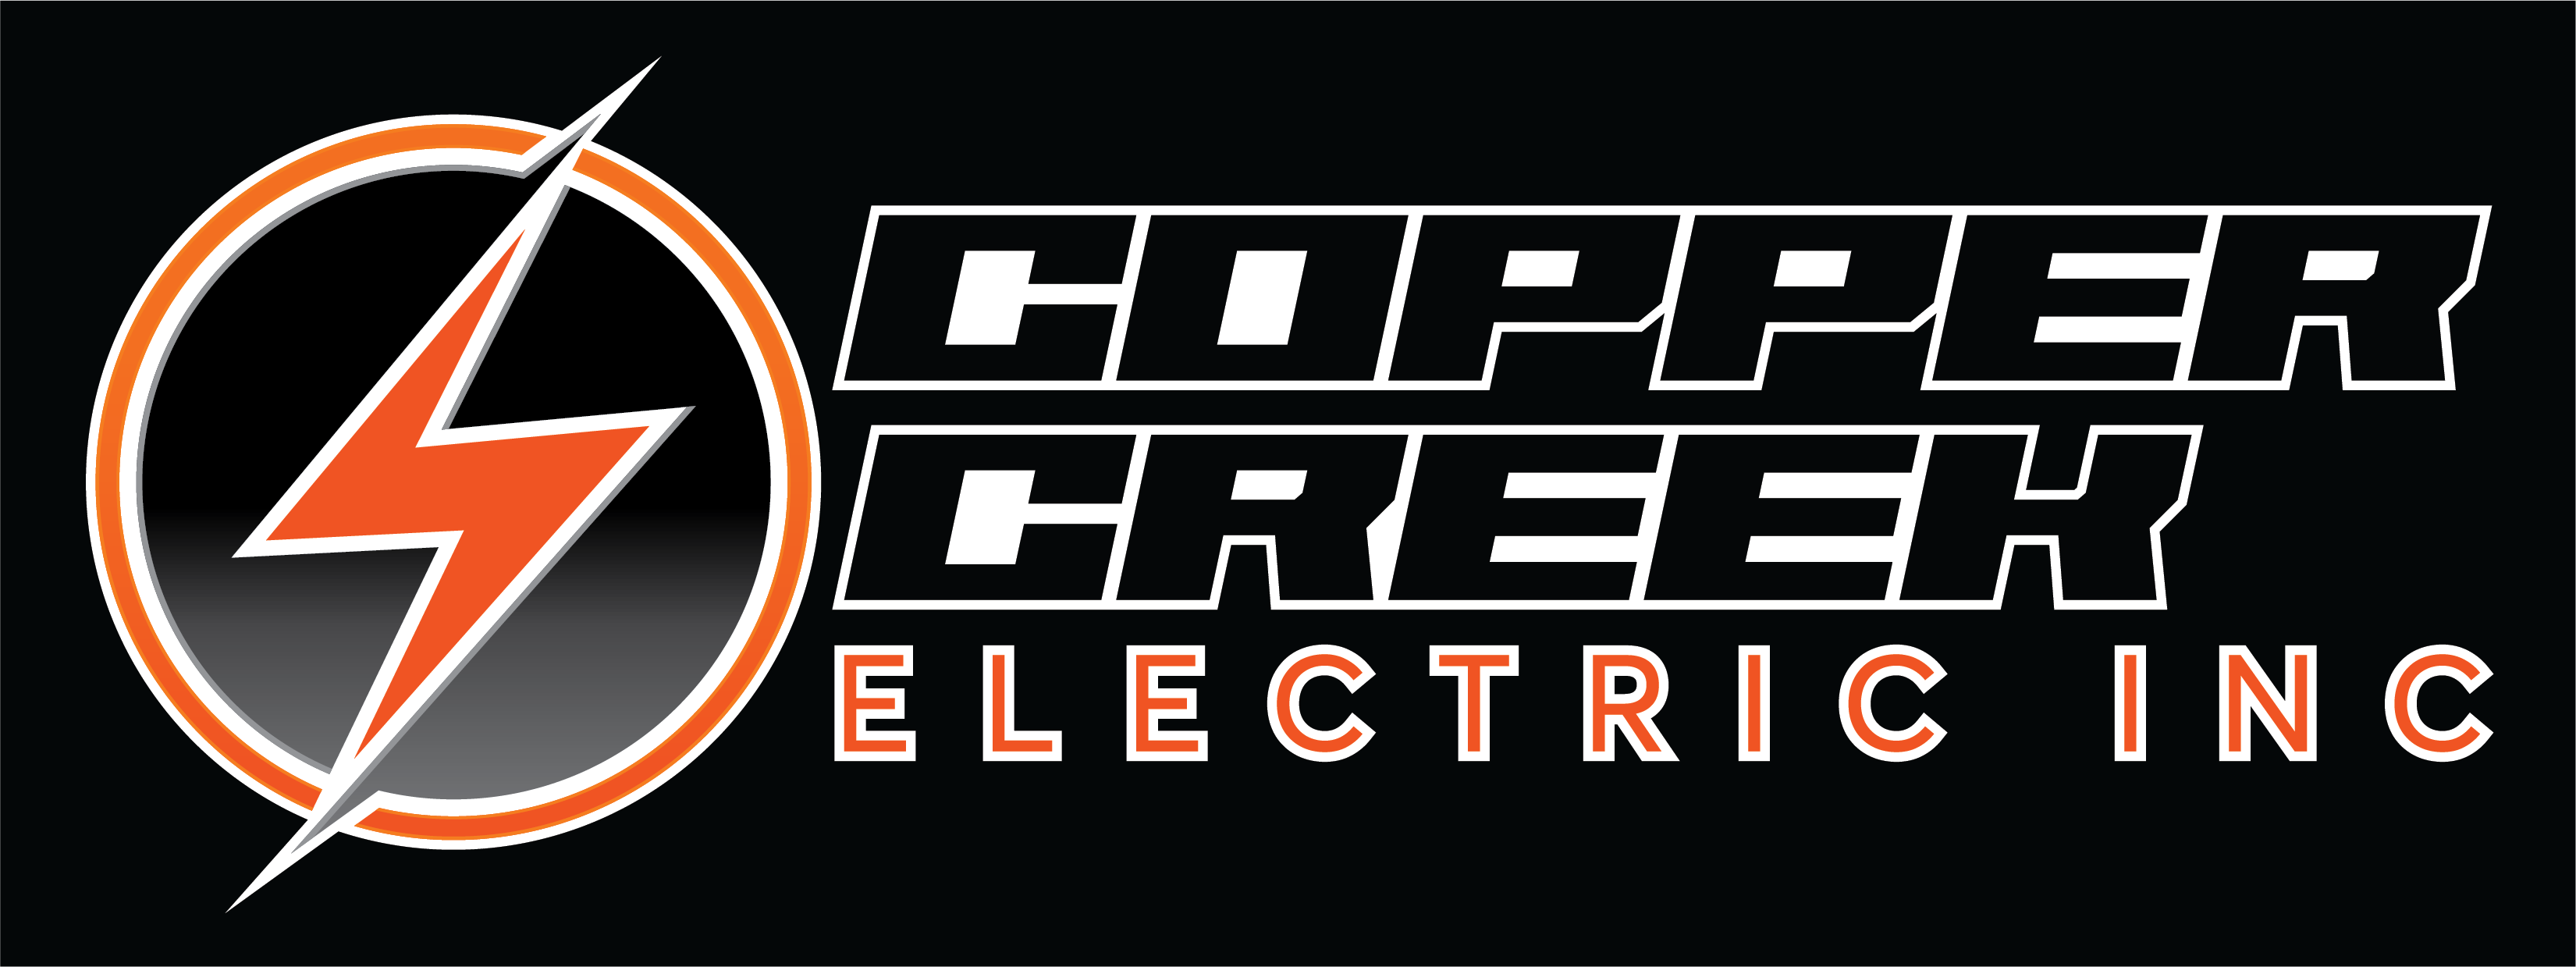 Copper Creek Electric Inc Logo